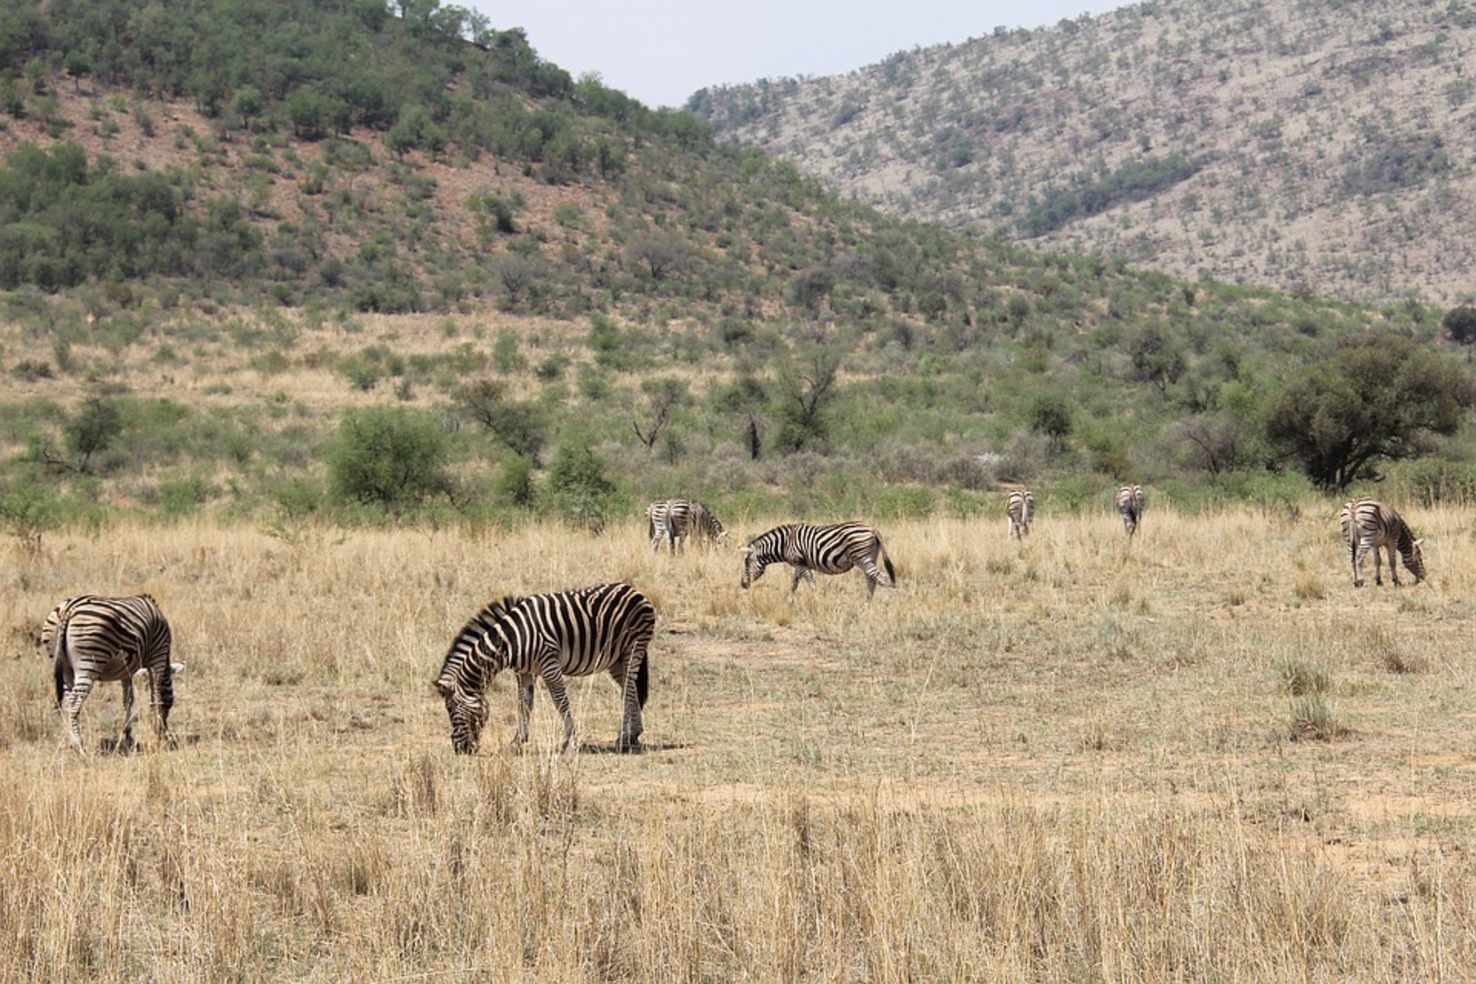 Large zebras